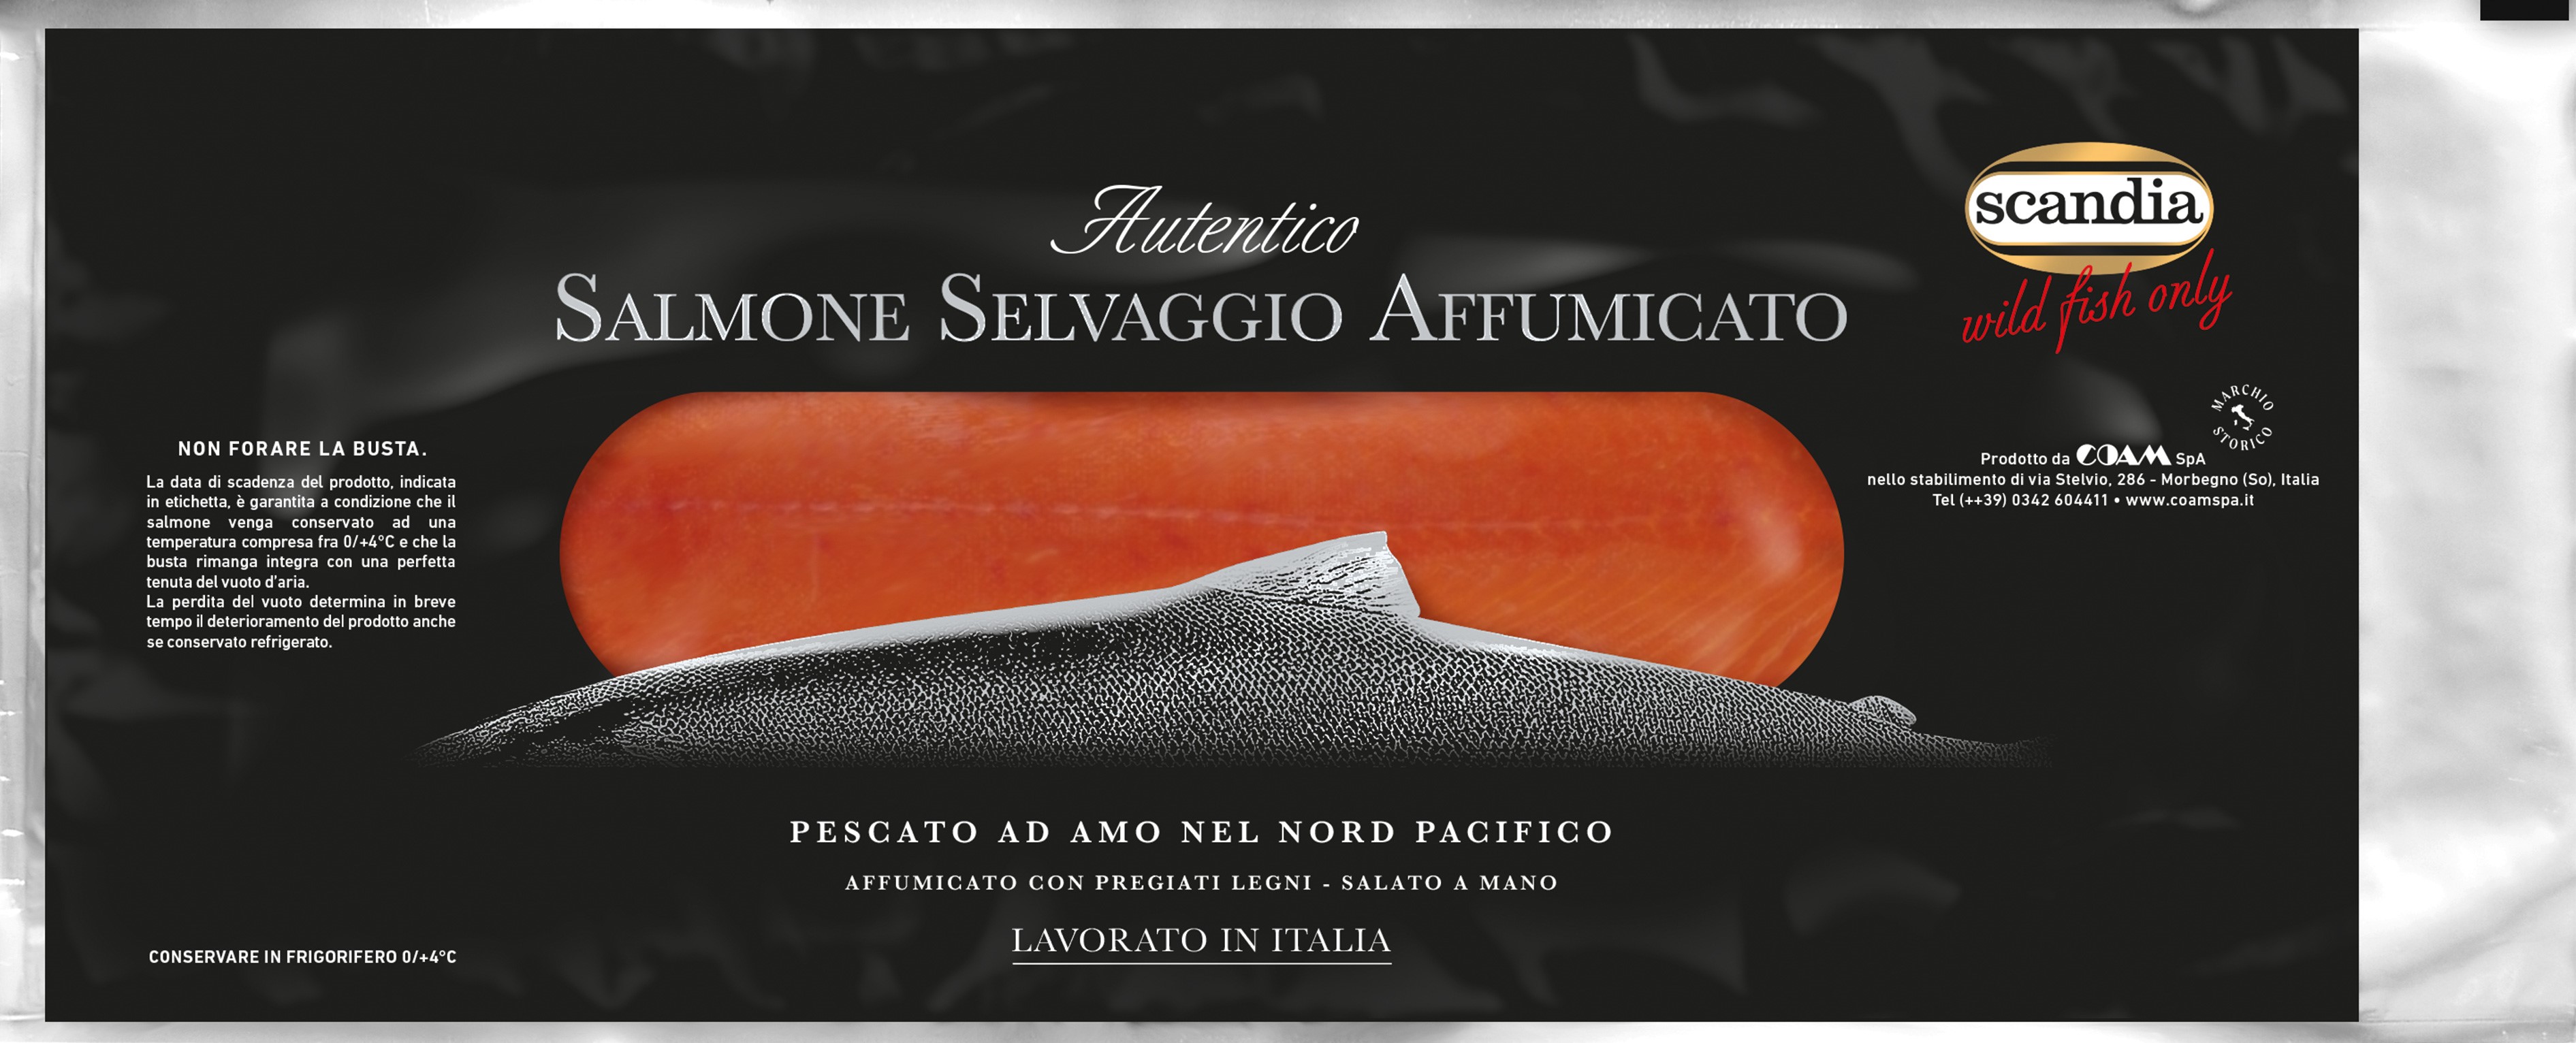 Salmone Argentato Selvaggio affumicato - Banda Intera Medium